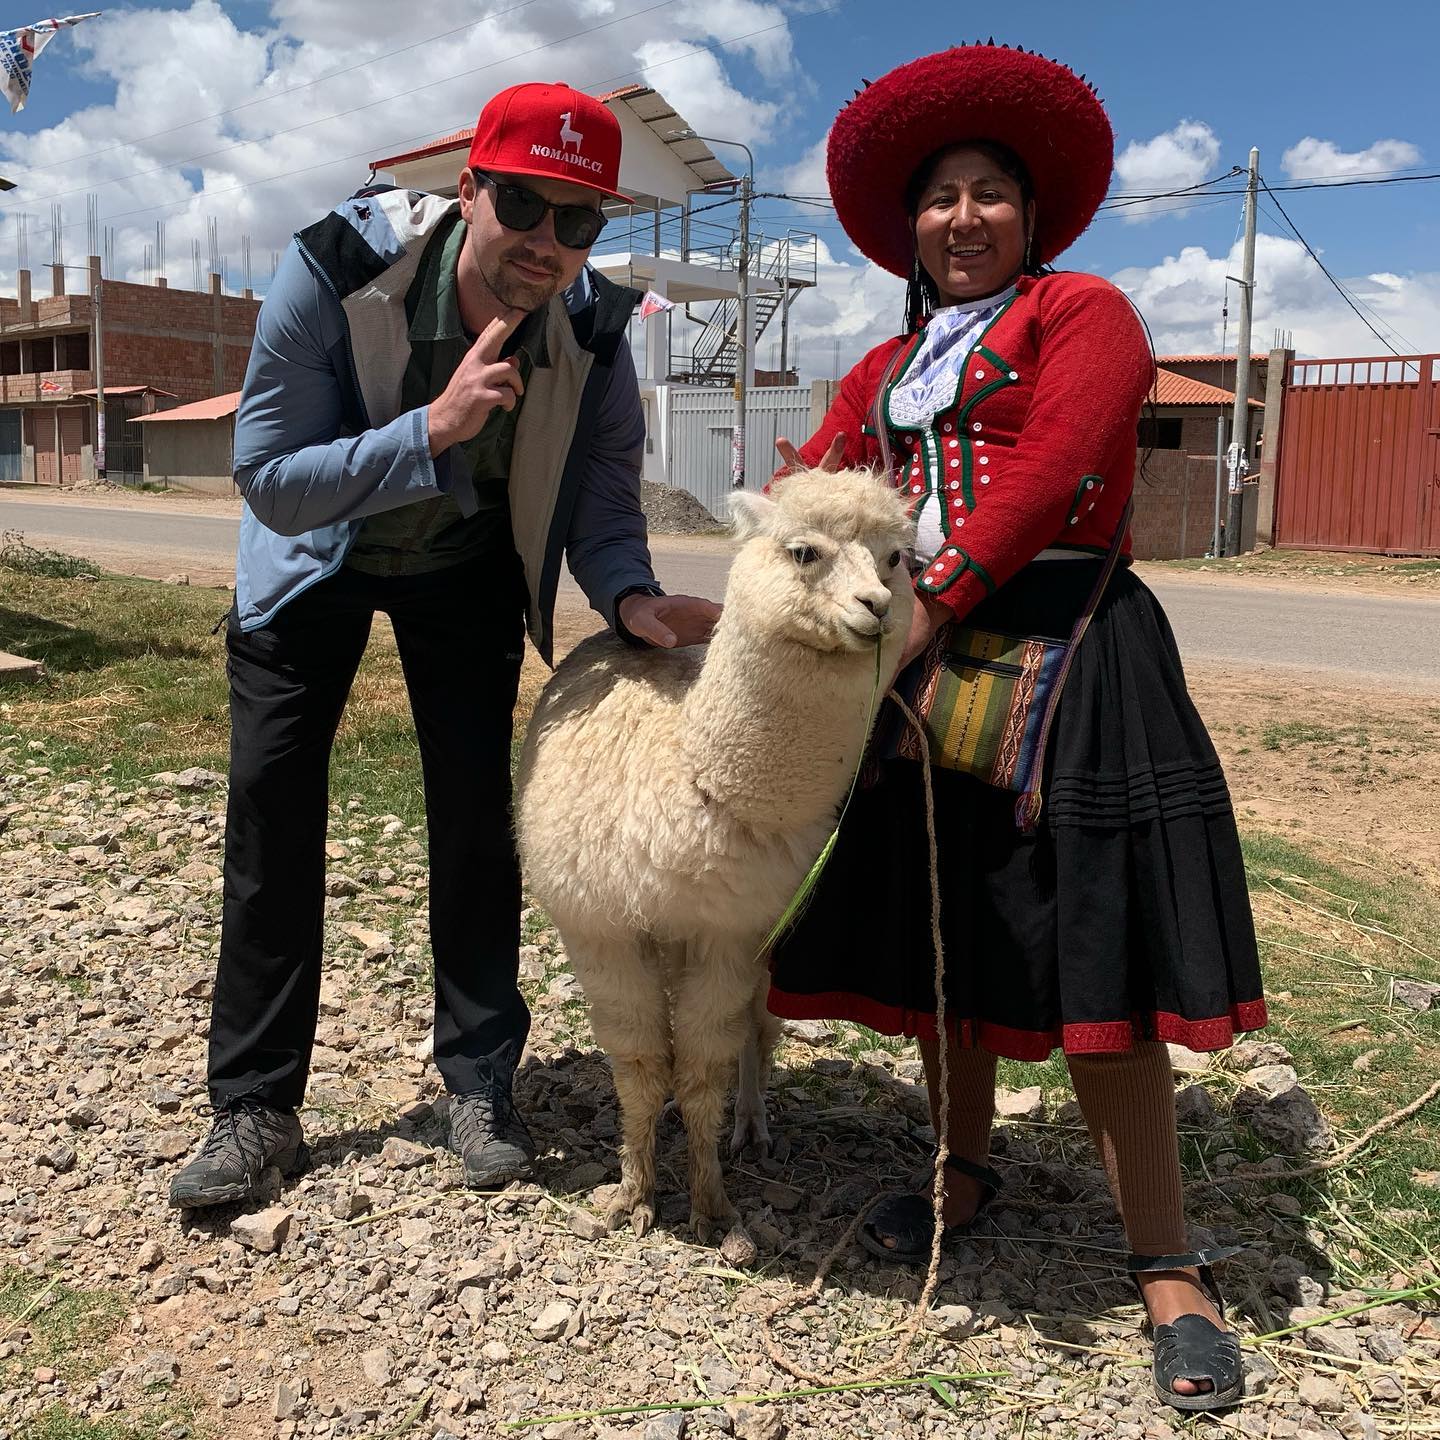 Finally meeting my llama 😎 #nomadic #peru #alpaka #bunchofdrunks